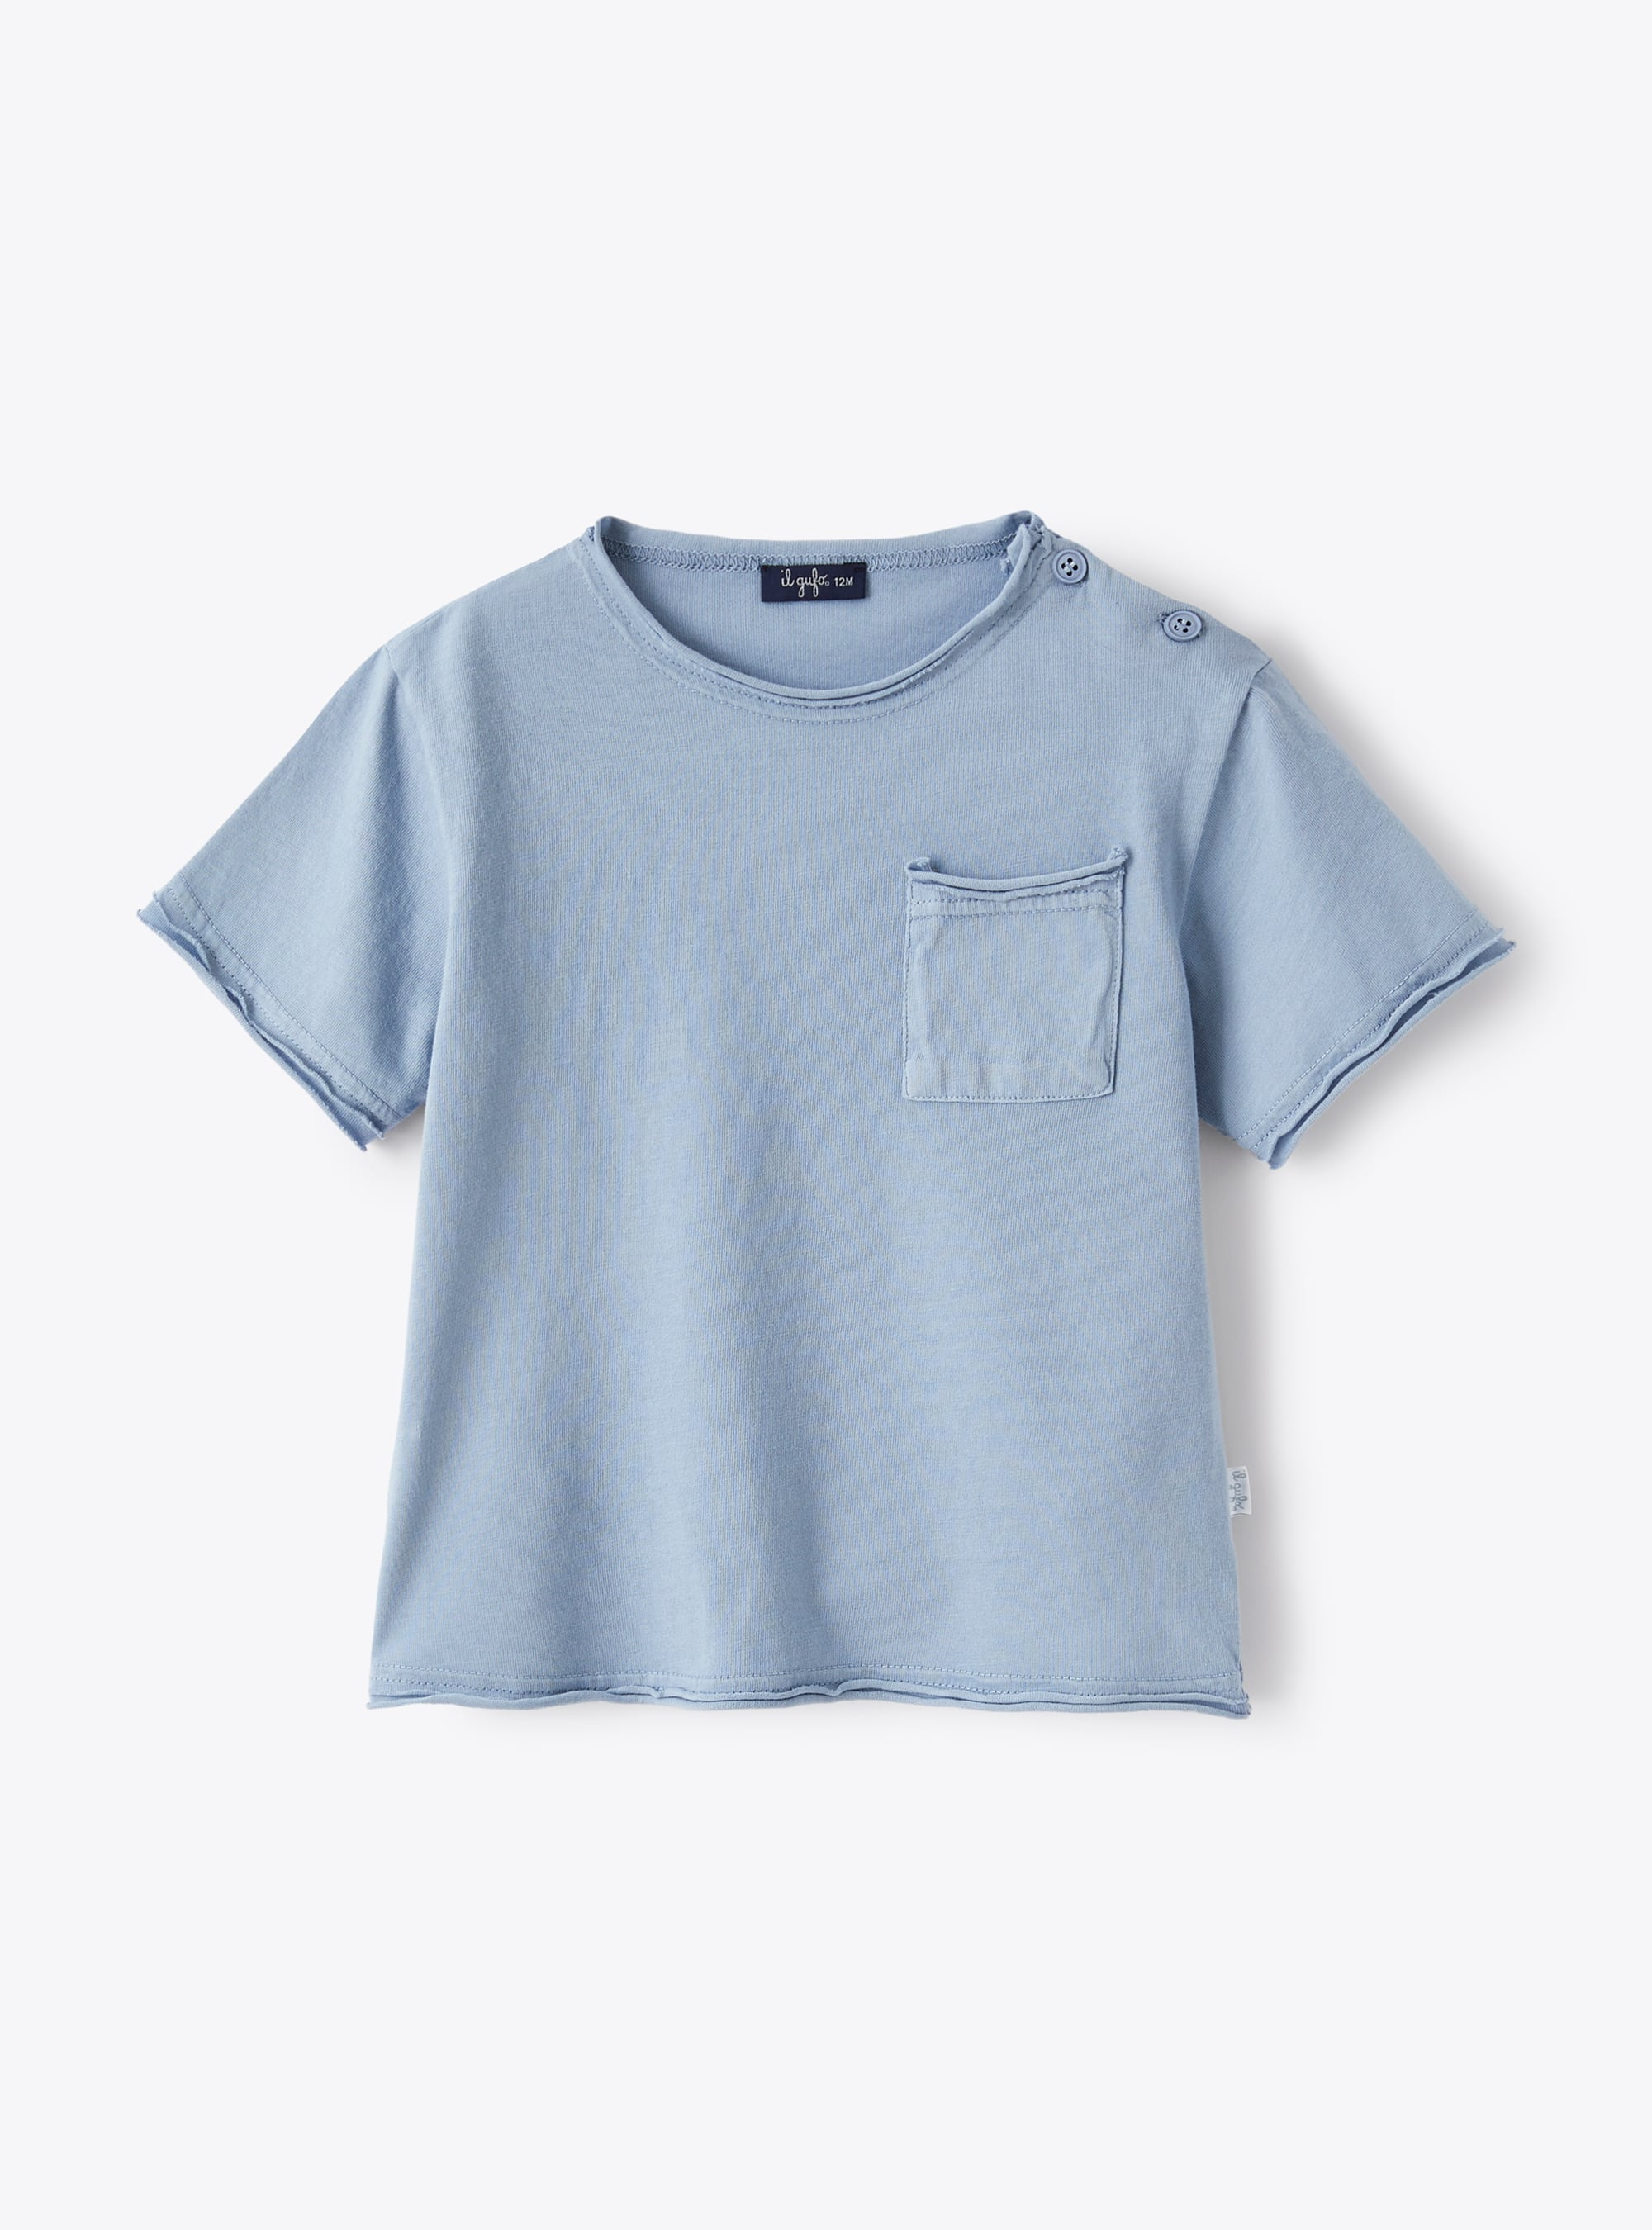 T-shirt in light-blue organic jersey - T-shirts - Il Gufo